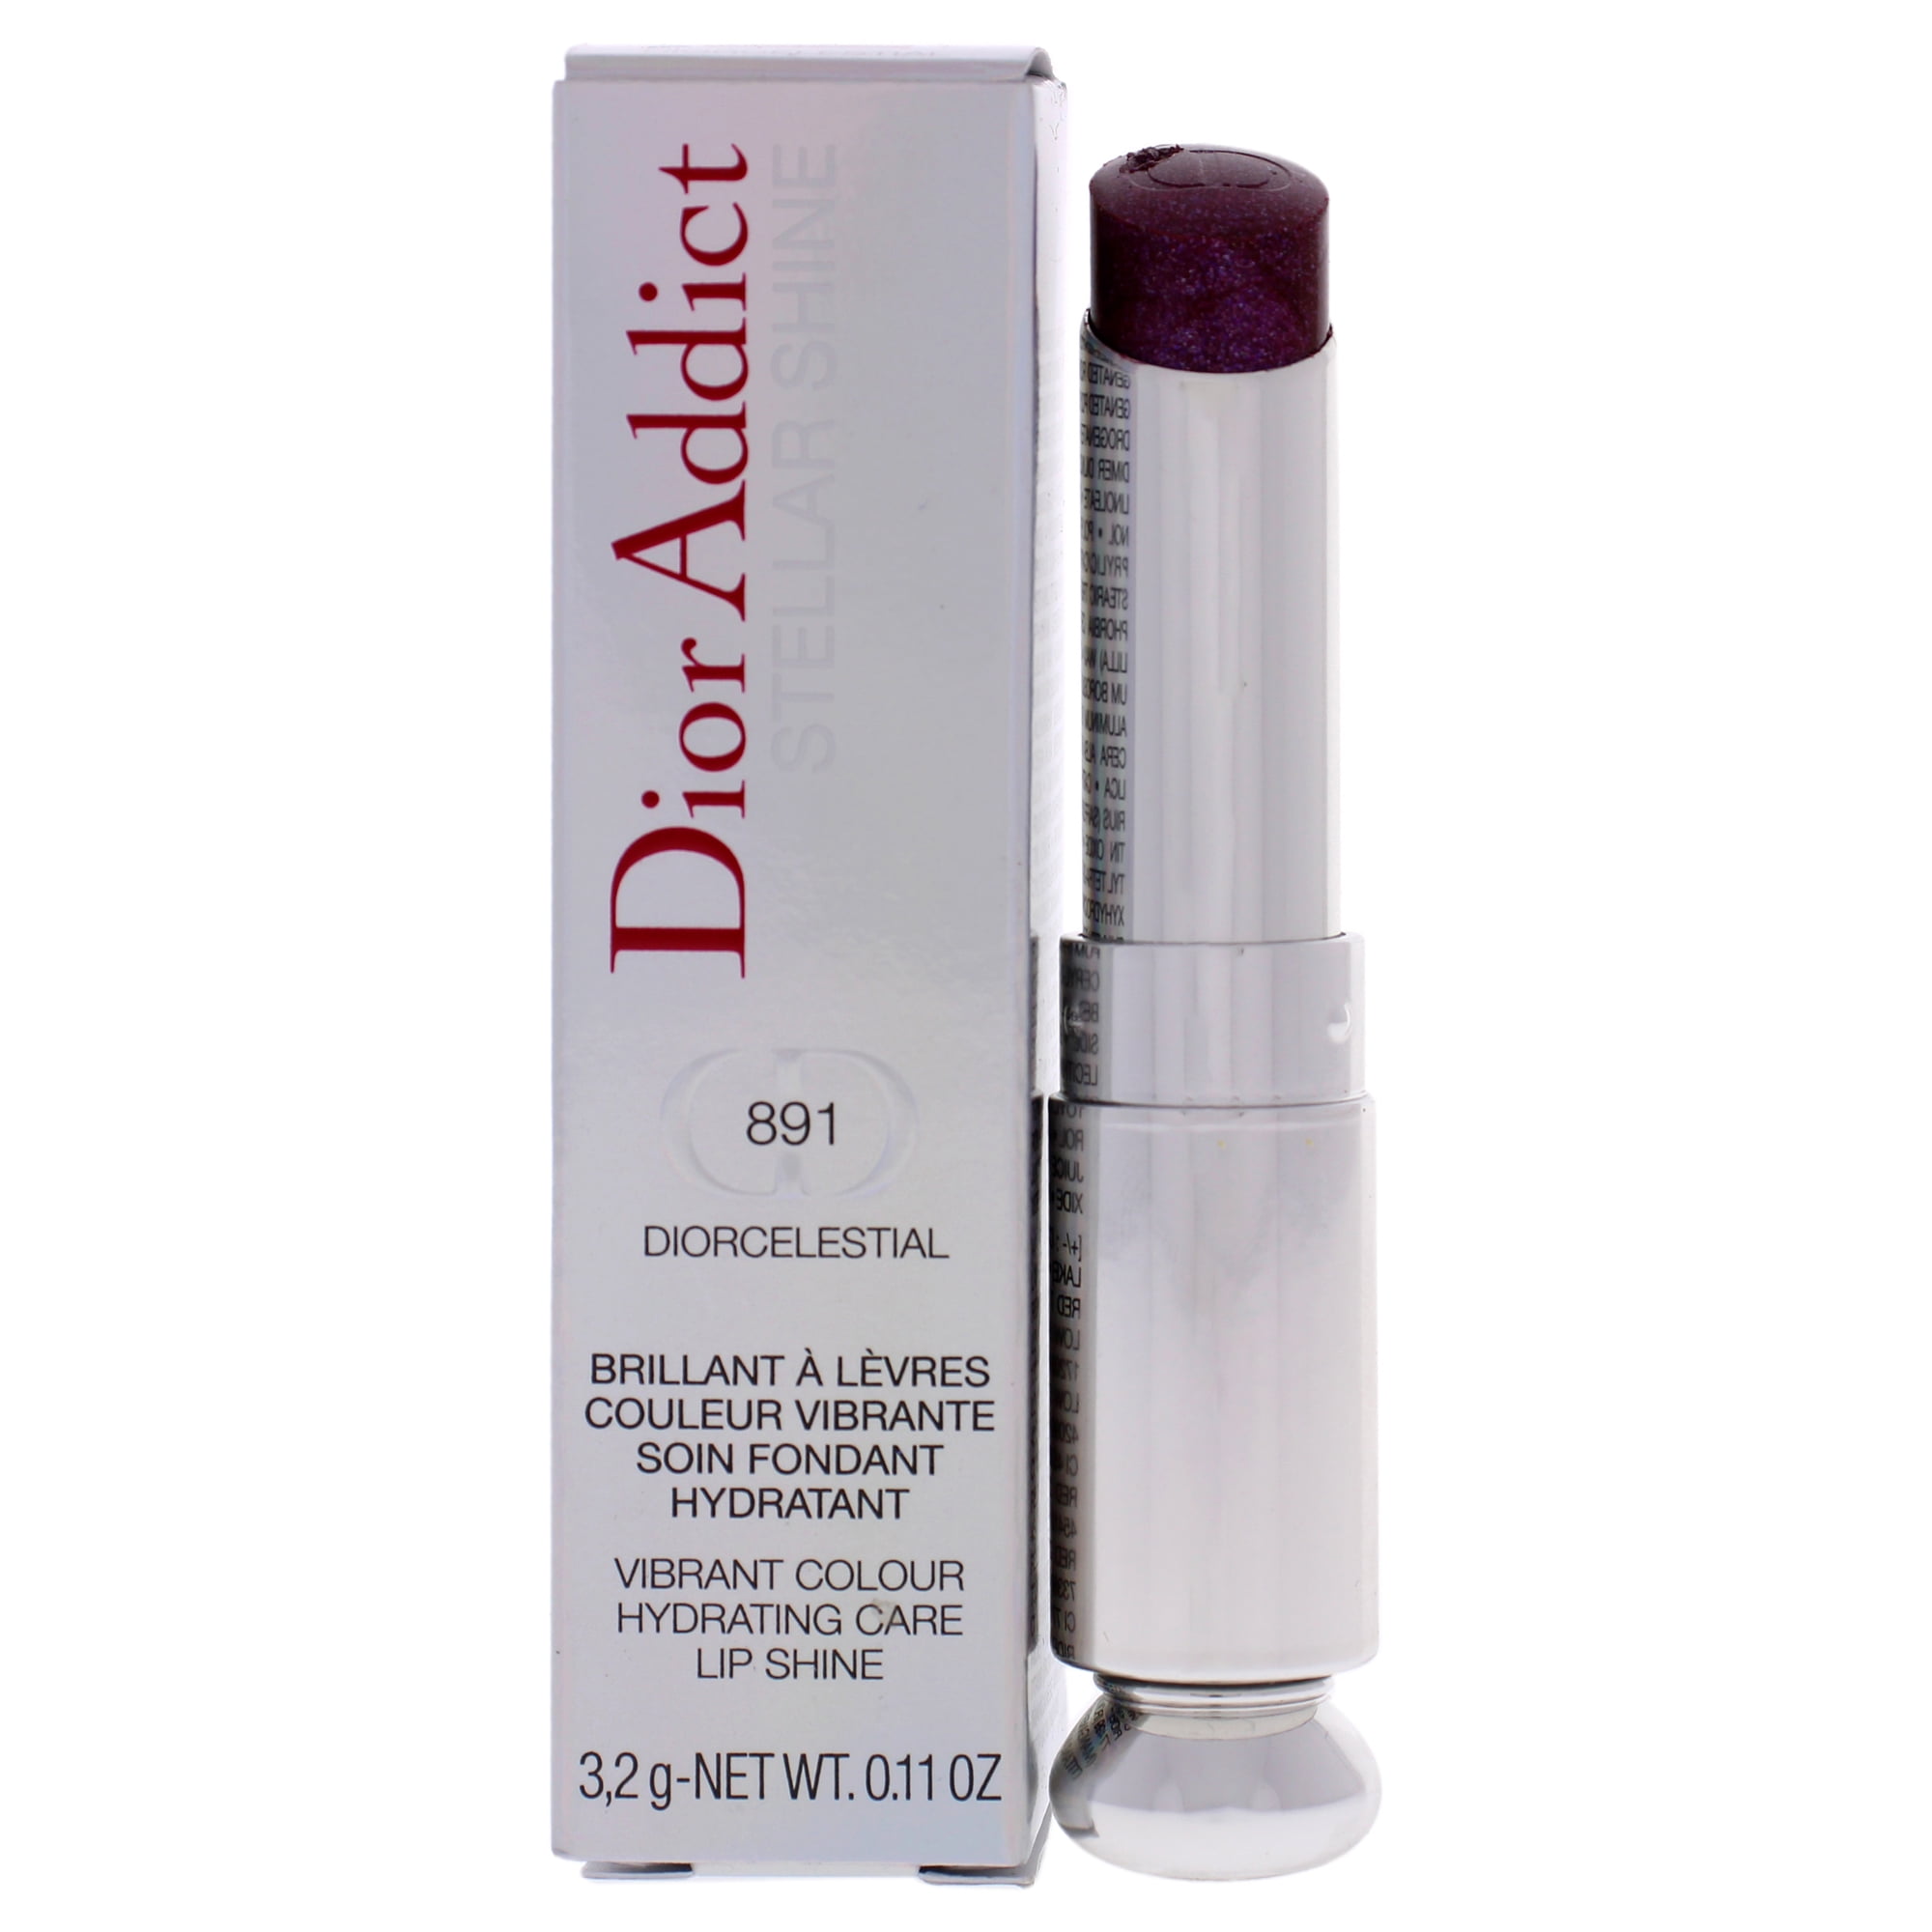 dior purple lipstick